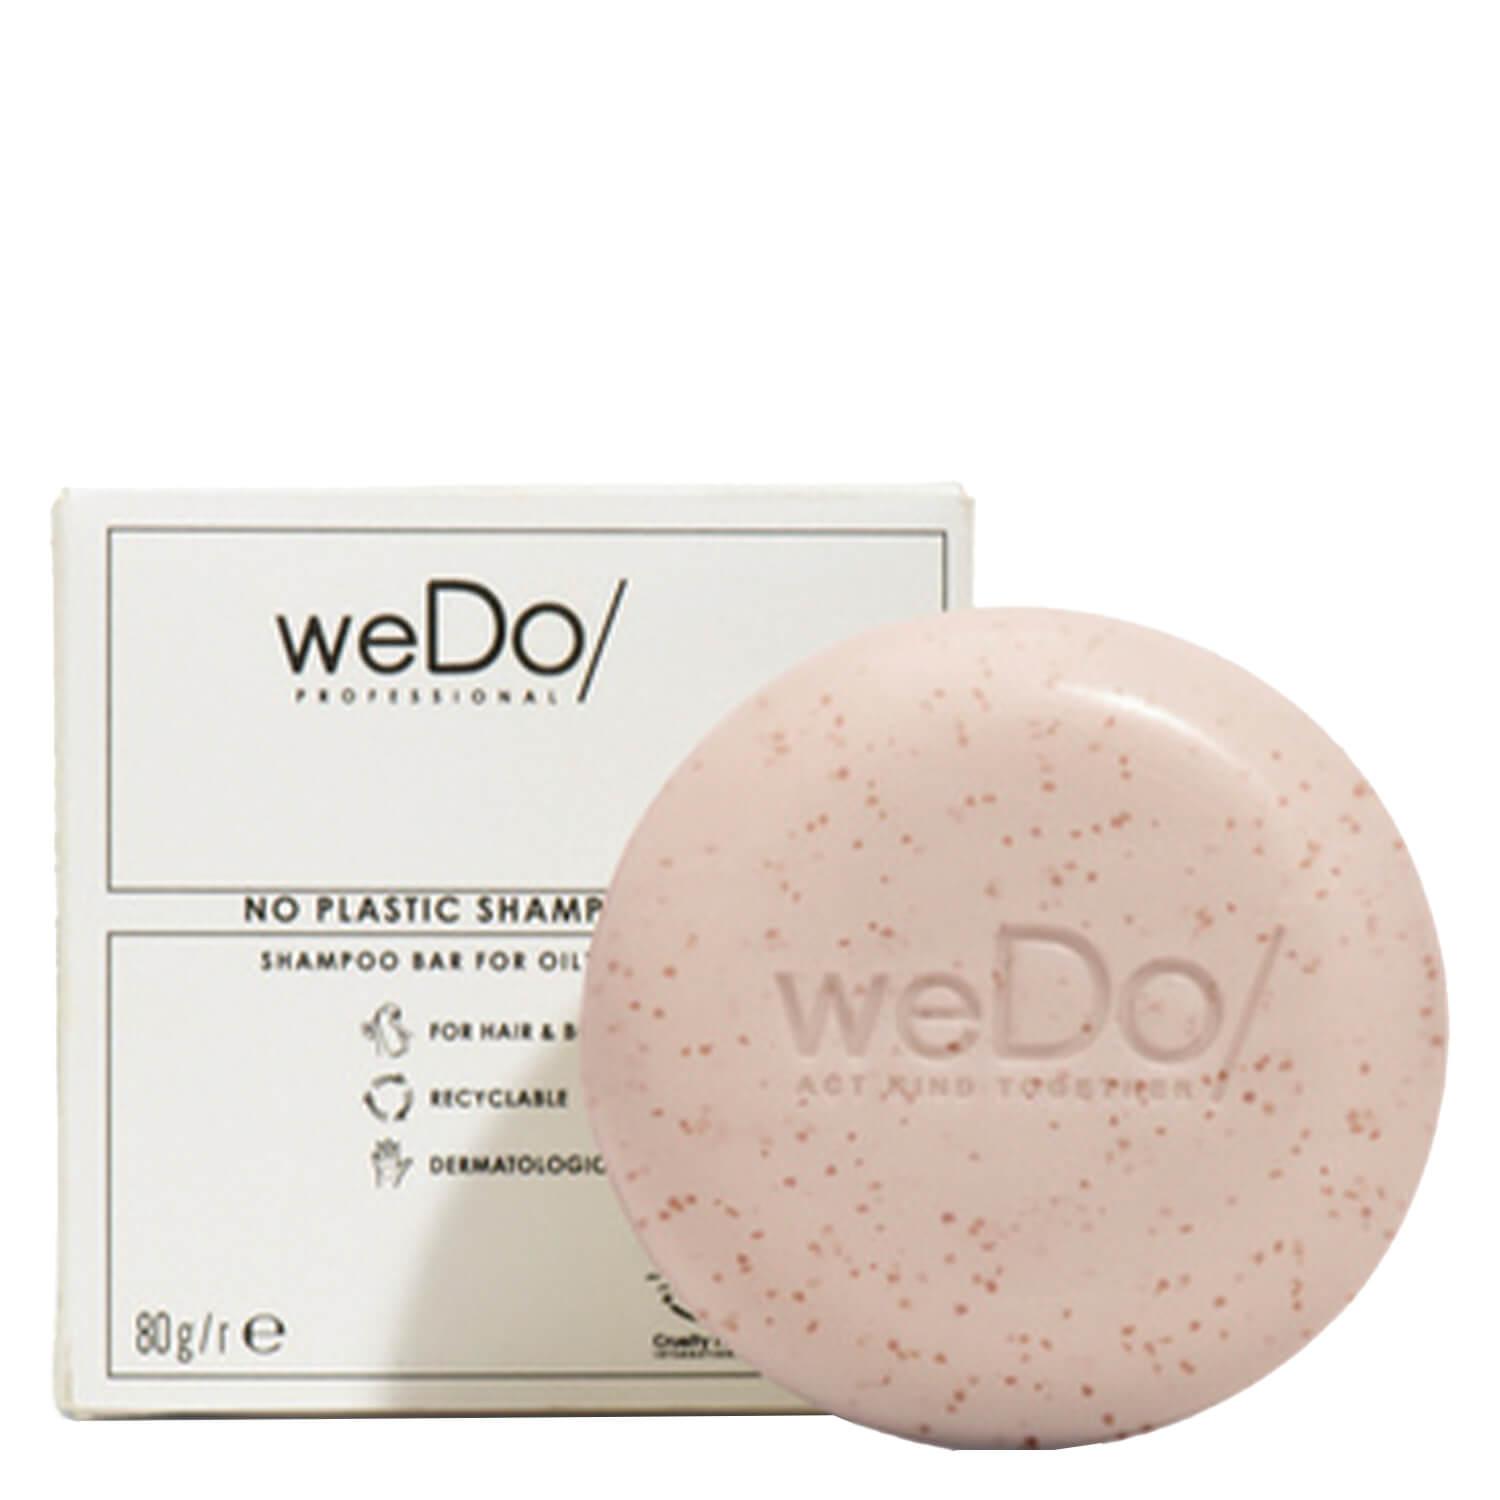 weDo/ - Purify Solid No Plastic Shampoo